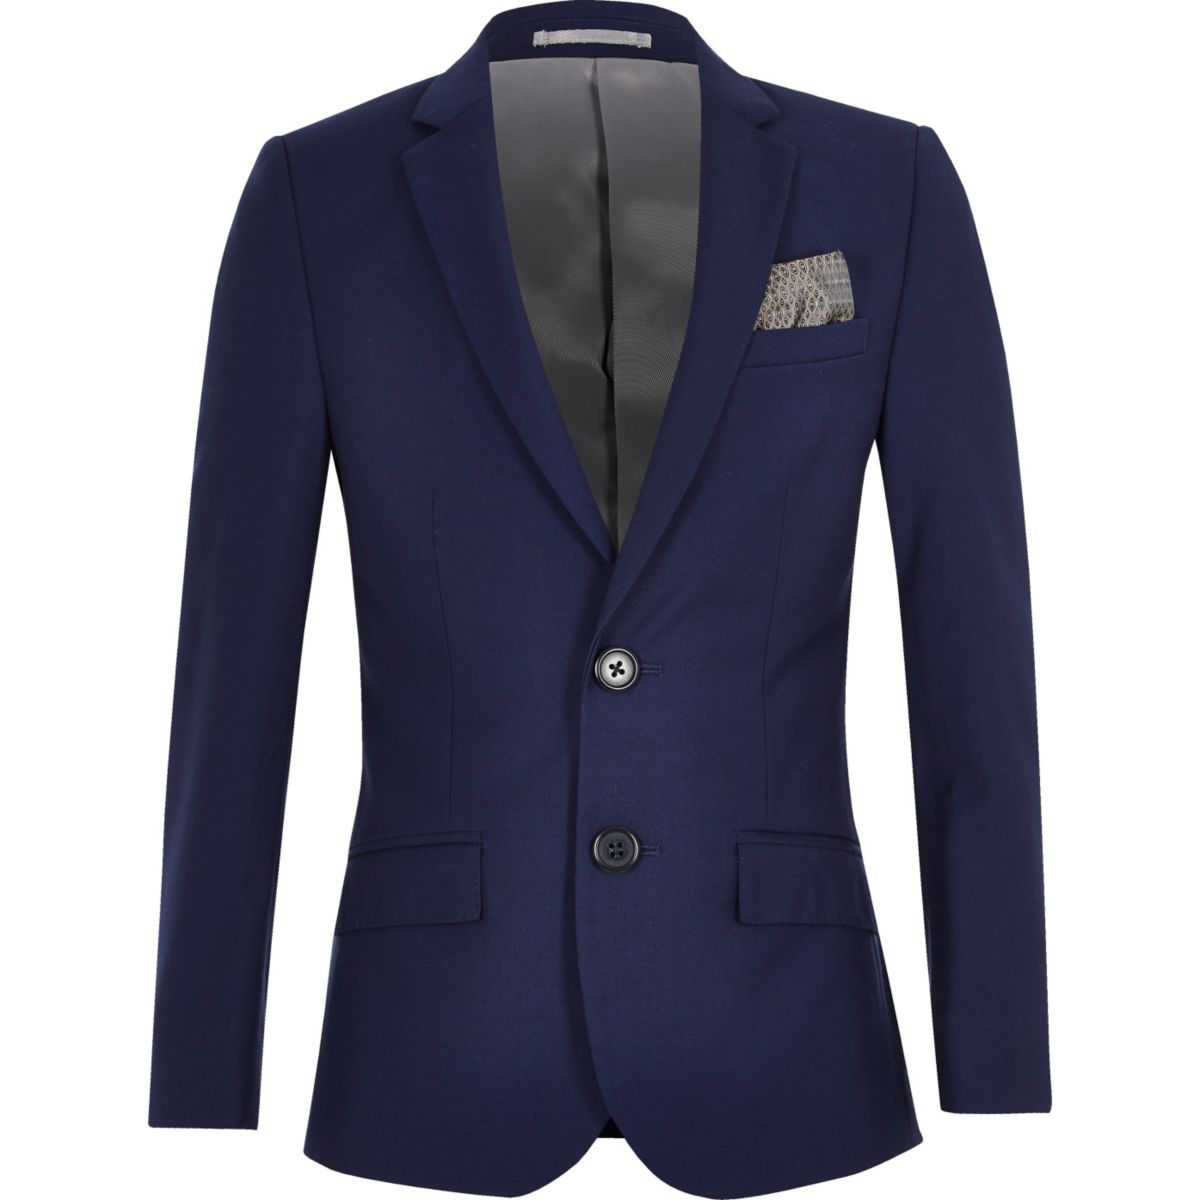 Boys bright blue suit jacket - Seasonal Offers - Sale - boys